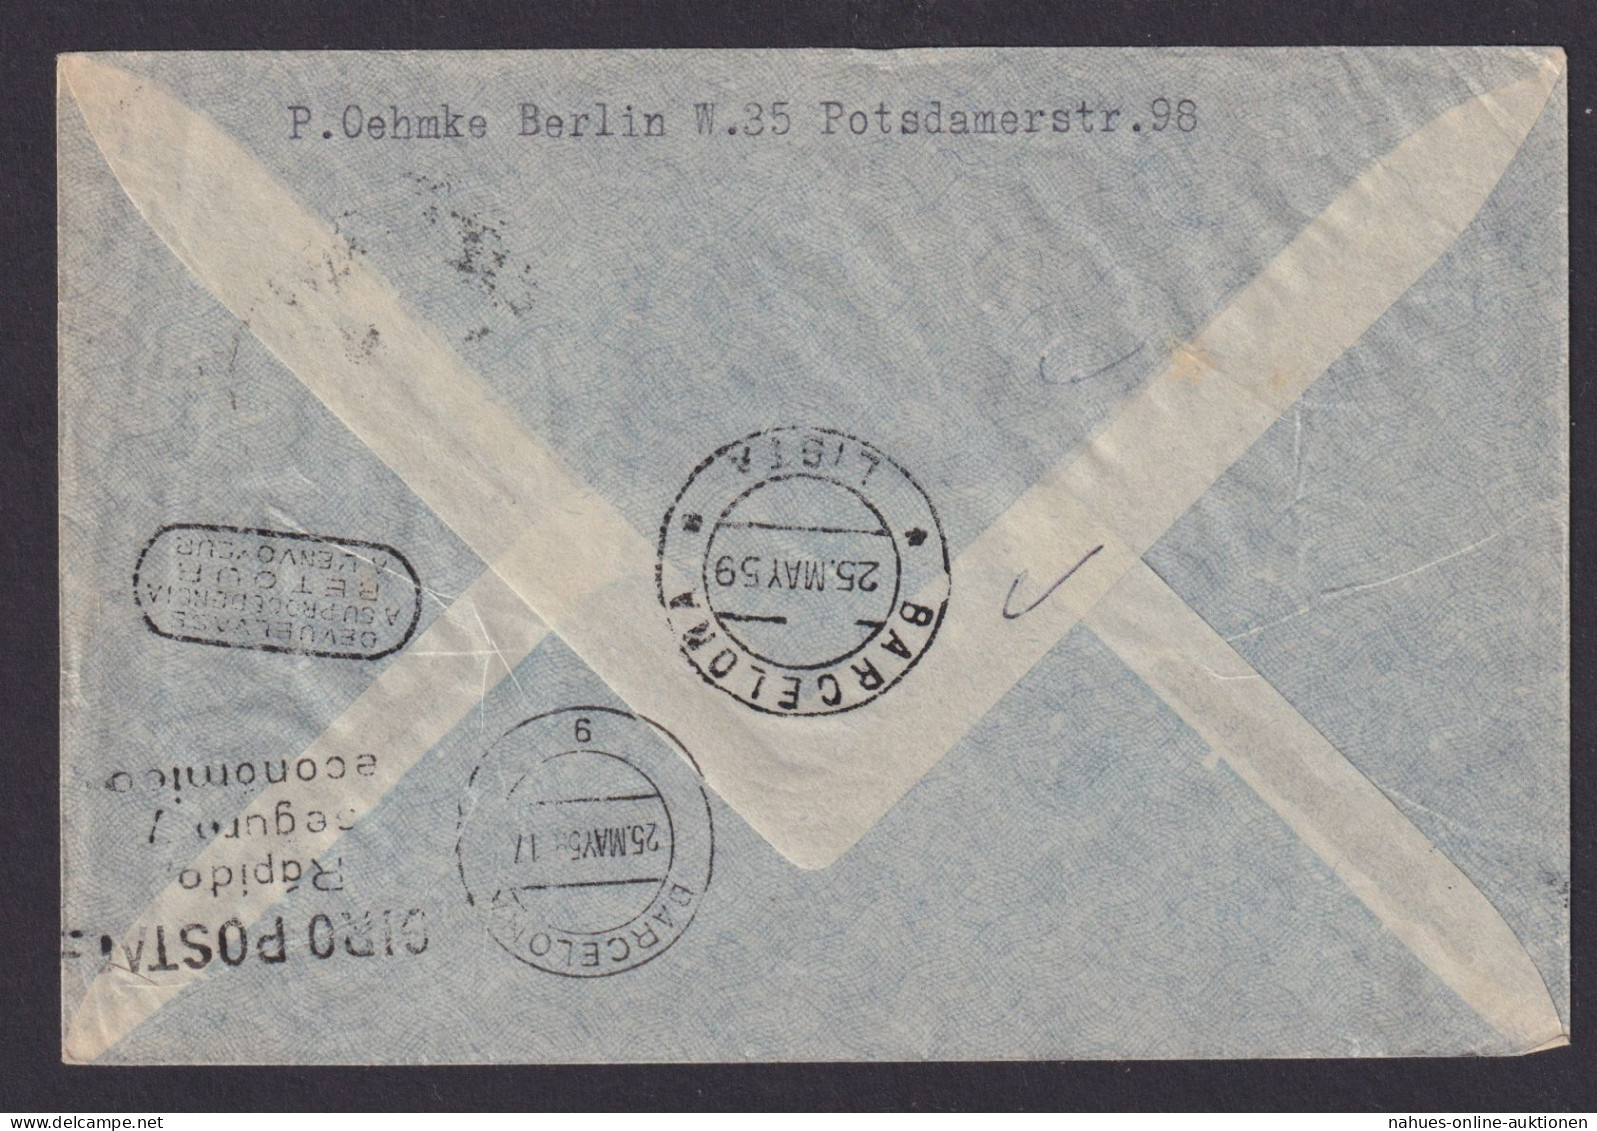 Briefmarken Flugpost Air Mail Frankfurt Barcelona Zuleitung DDR Berlin Rs. Div. - Covers & Documents